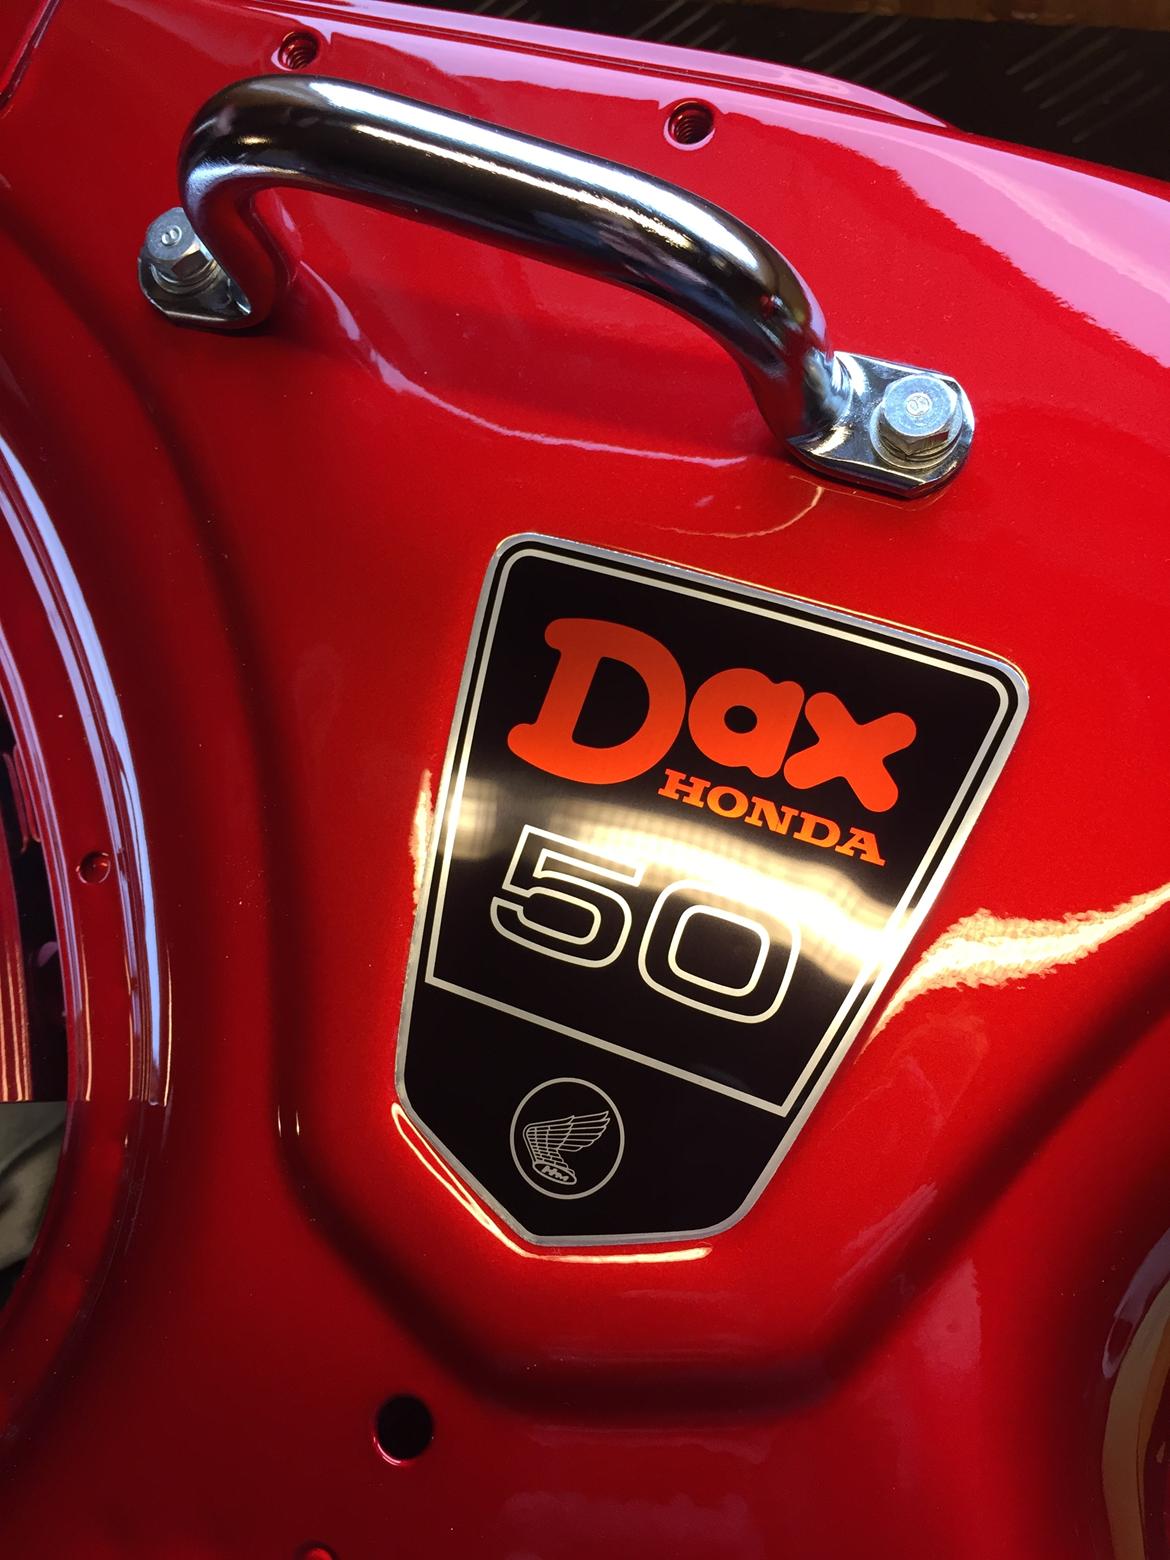 Honda Dax billede 6